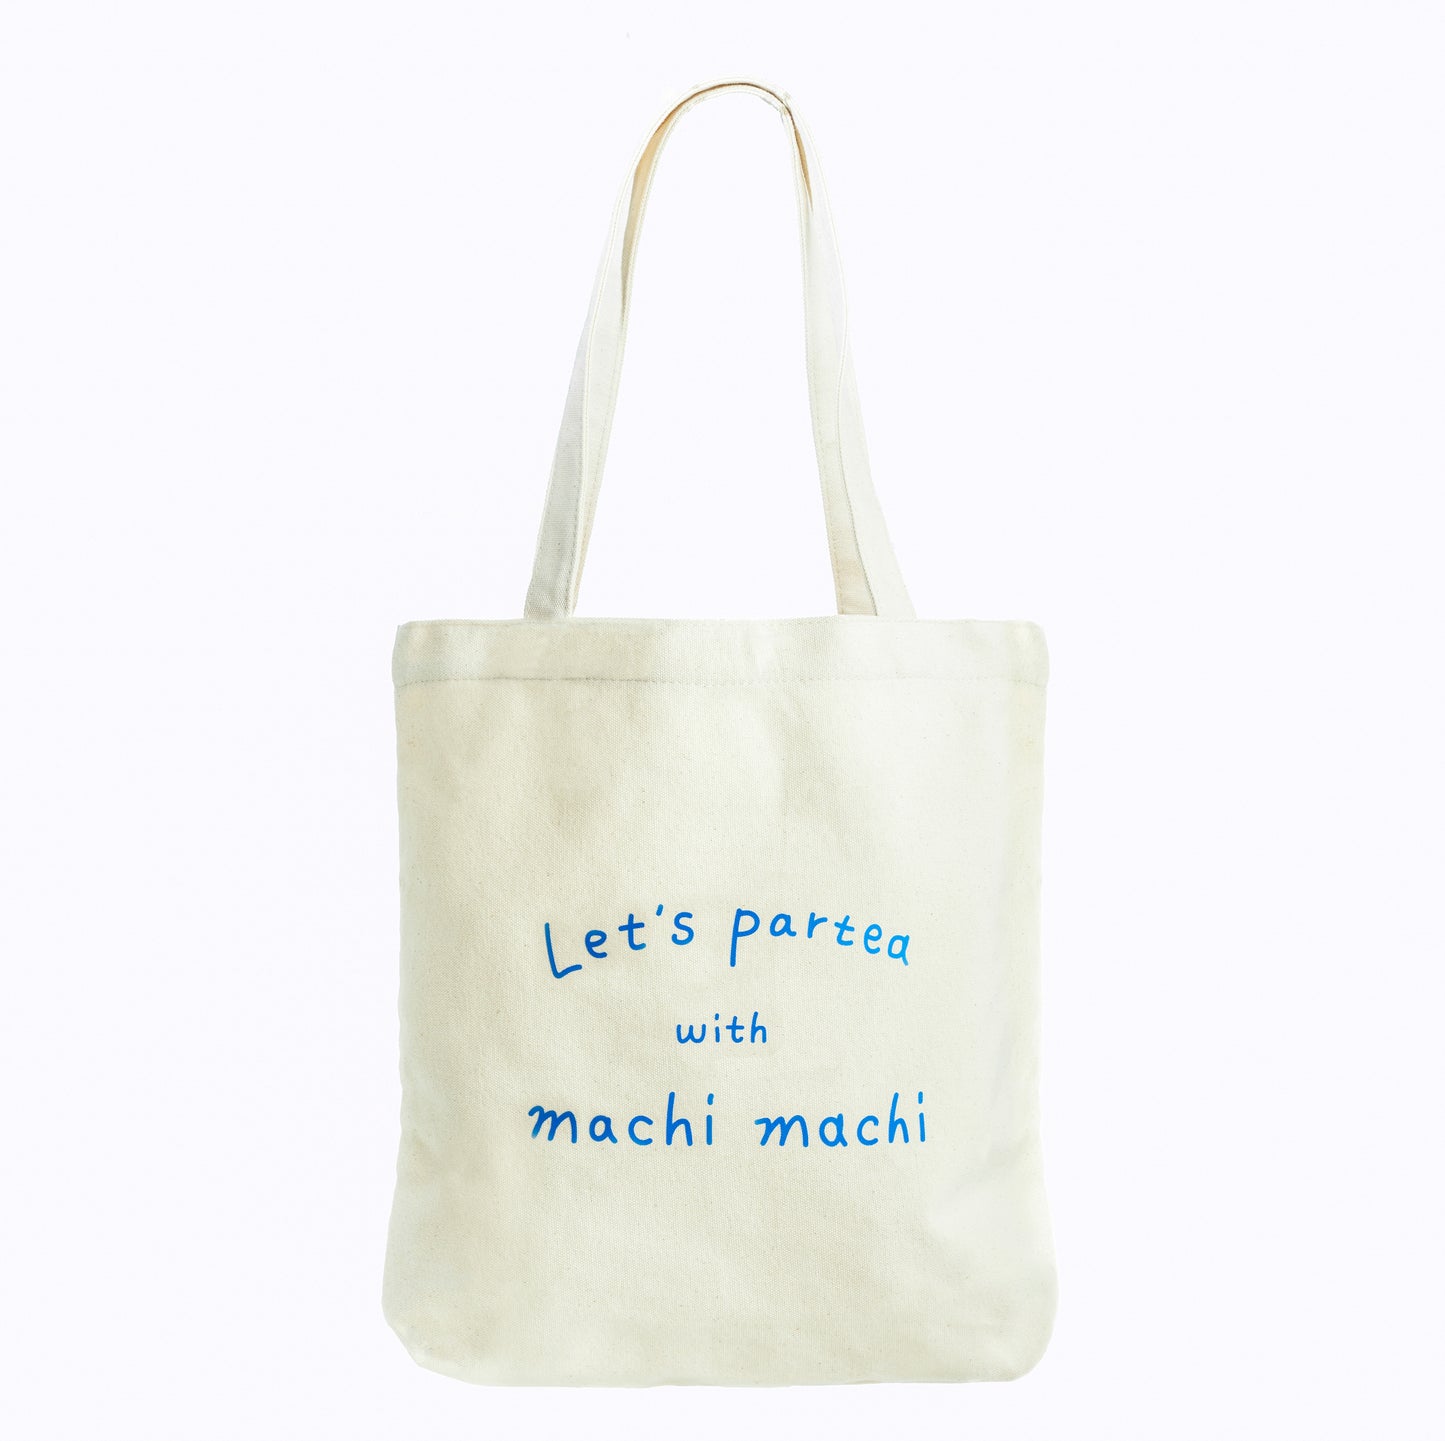 Partea with machi machi 環保帆布袋